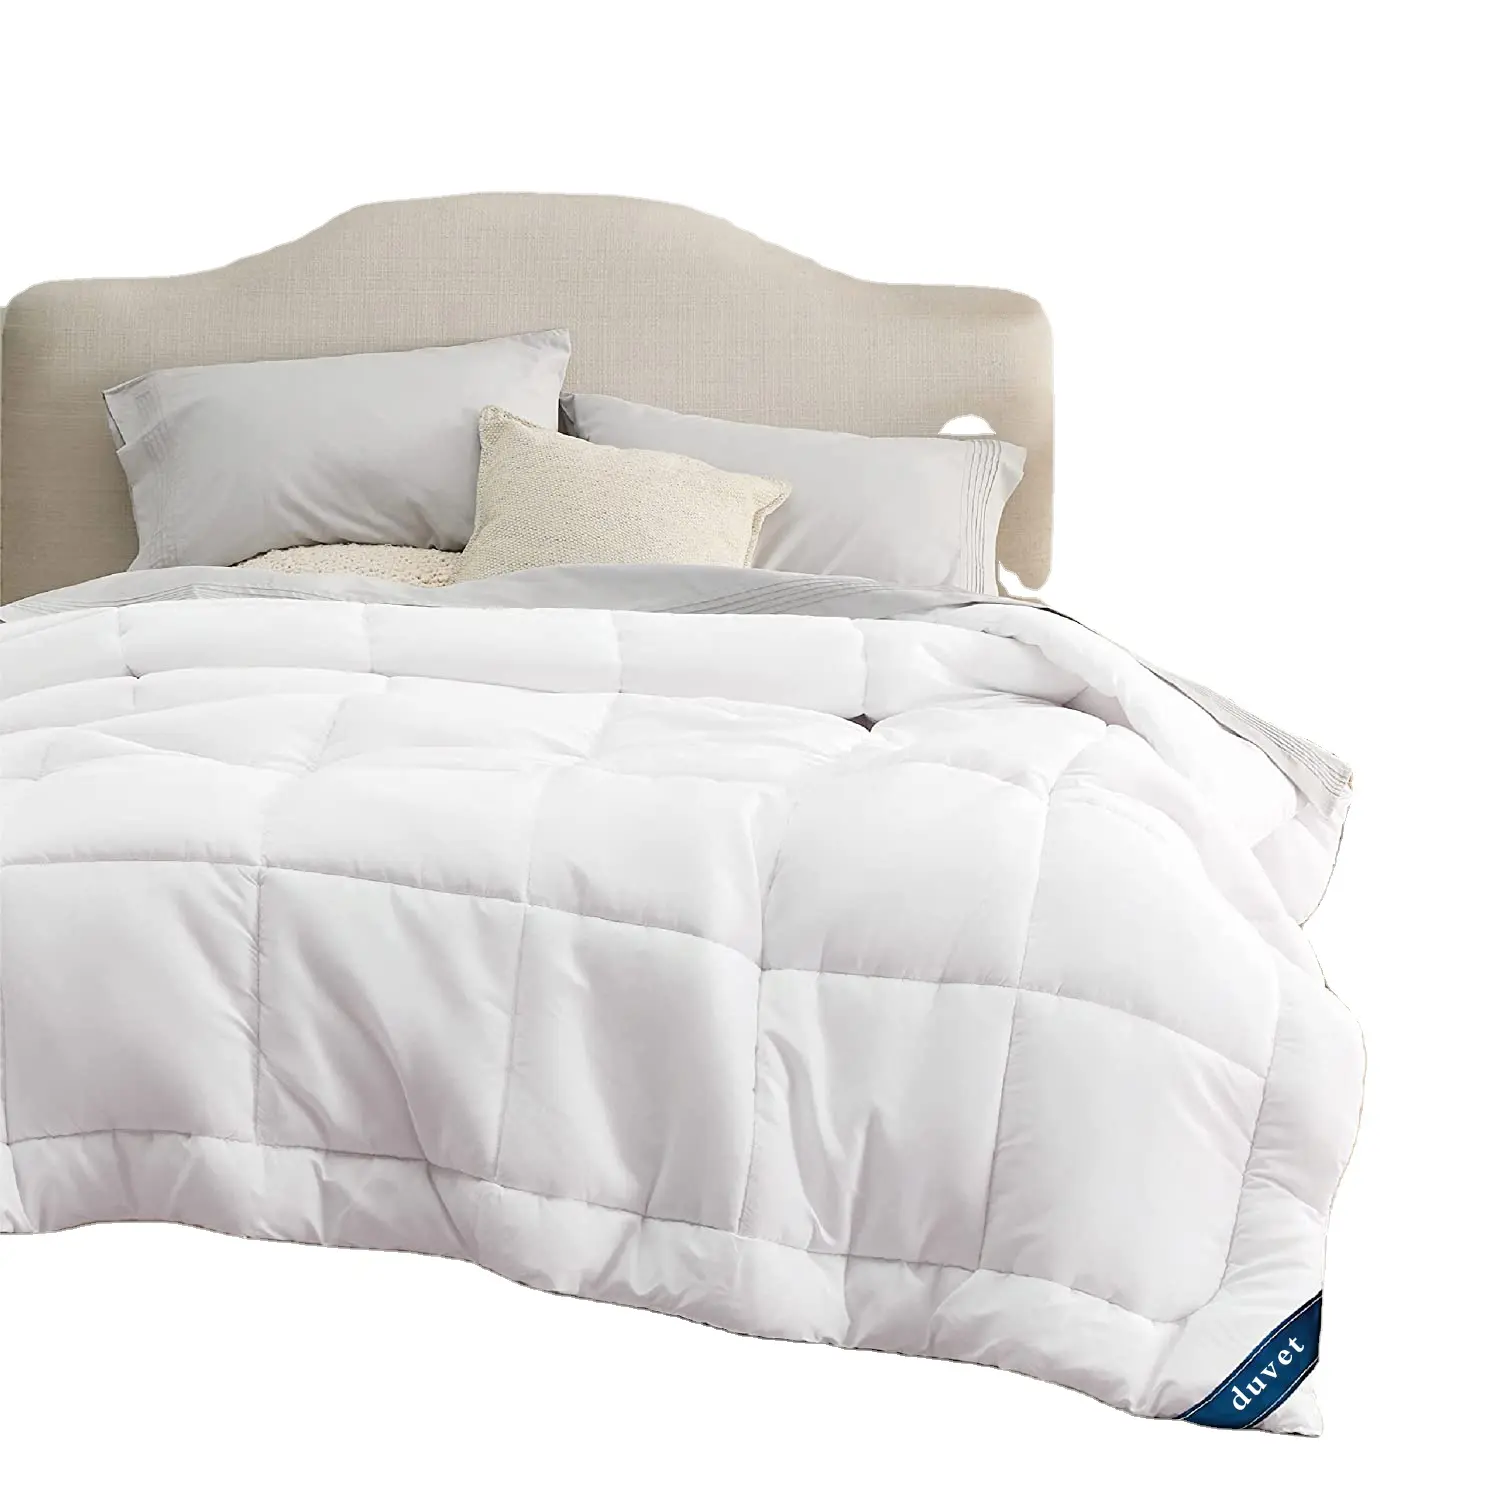 All Season Down Alternative Comforter Twin Size - White Fluffy Duvet Insert With Corner Tabs - Plush Microfiber Fill